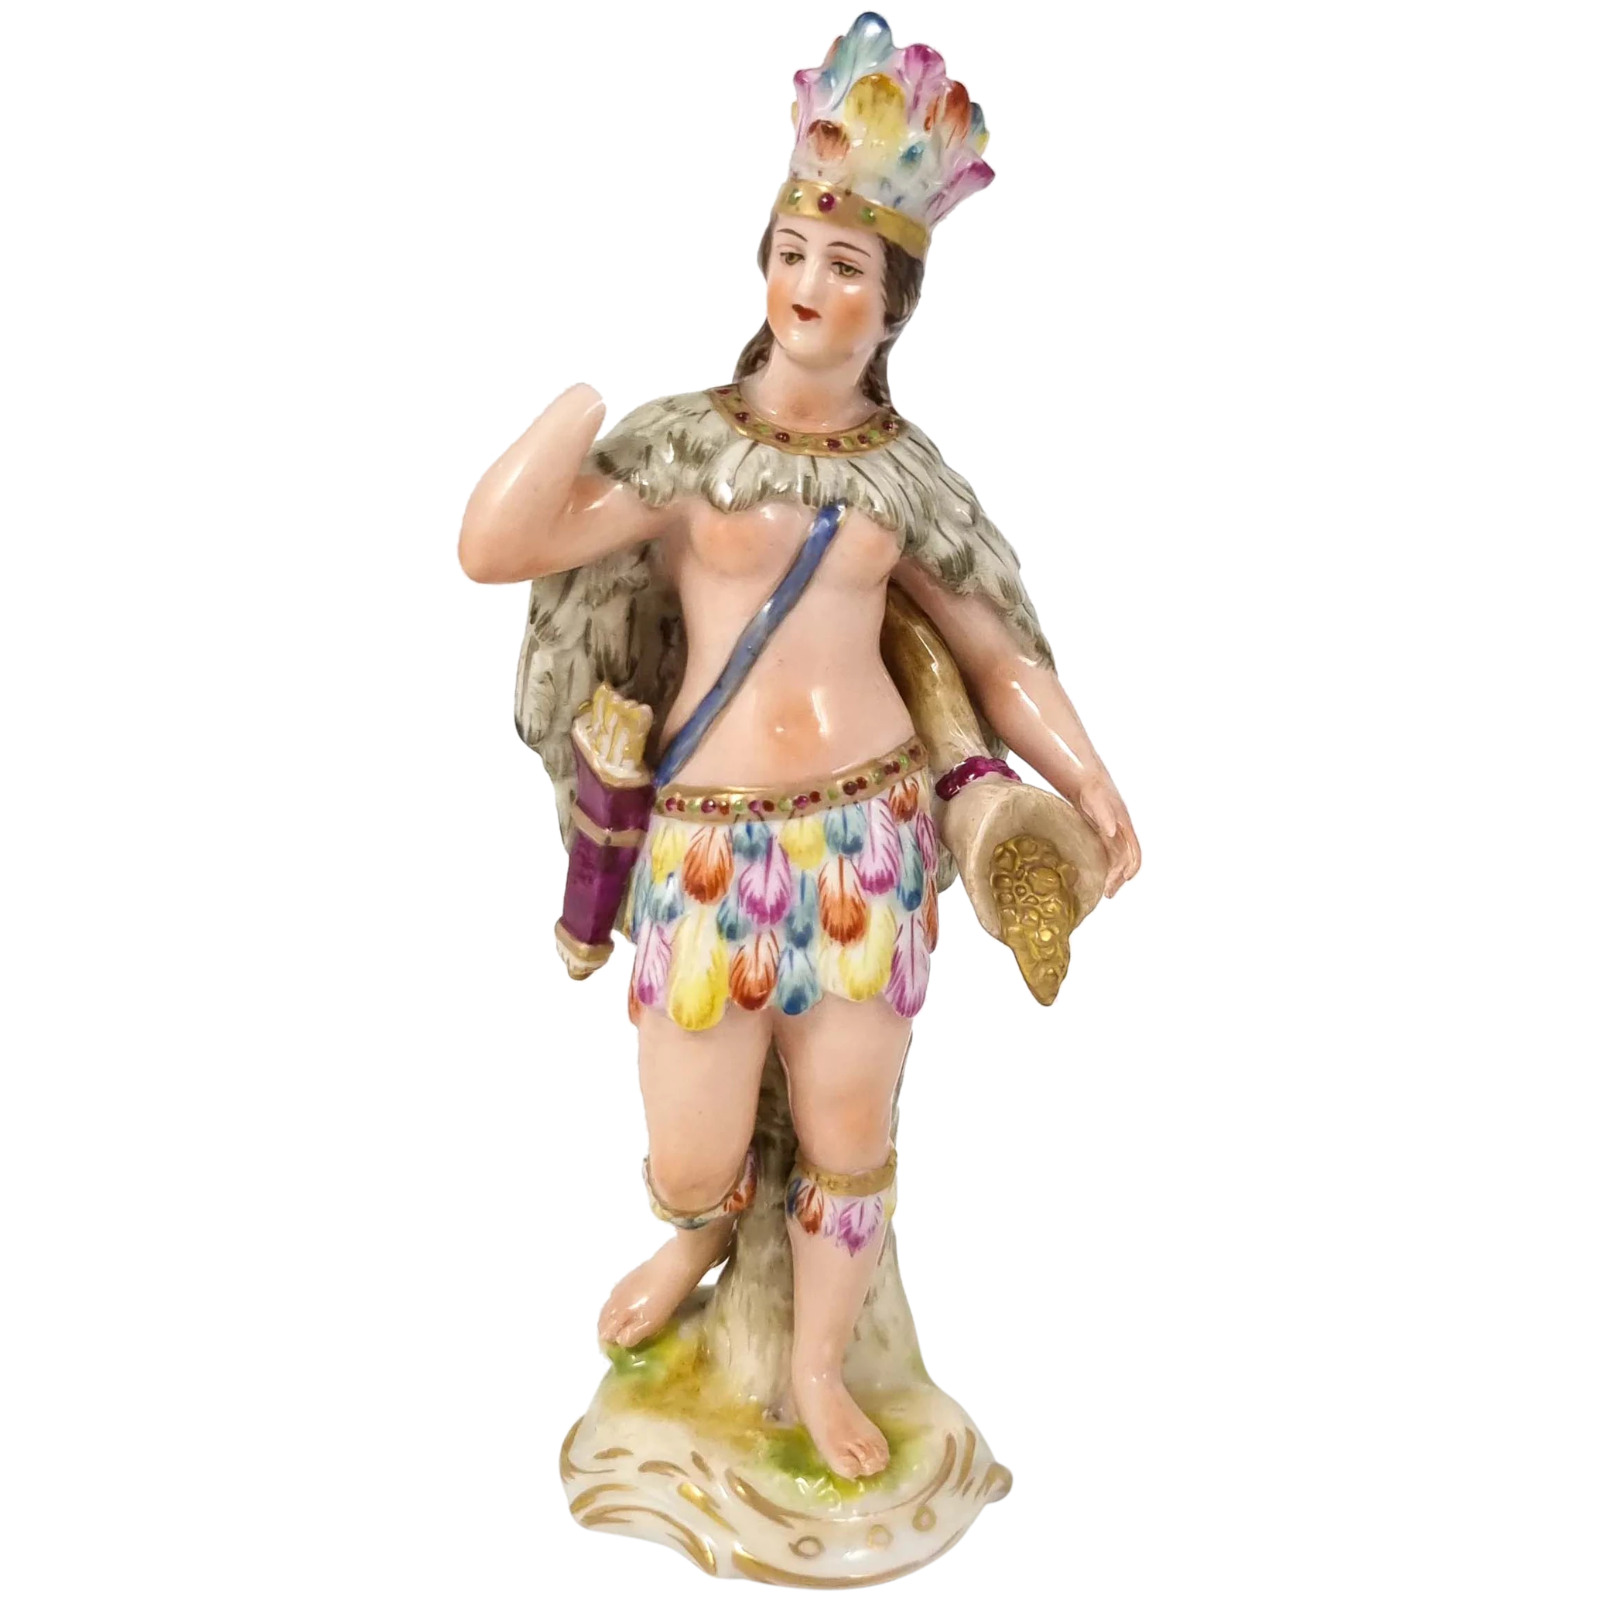 Antique Gotha 1820s allegorical porcelain figurine America “Four Continents” set